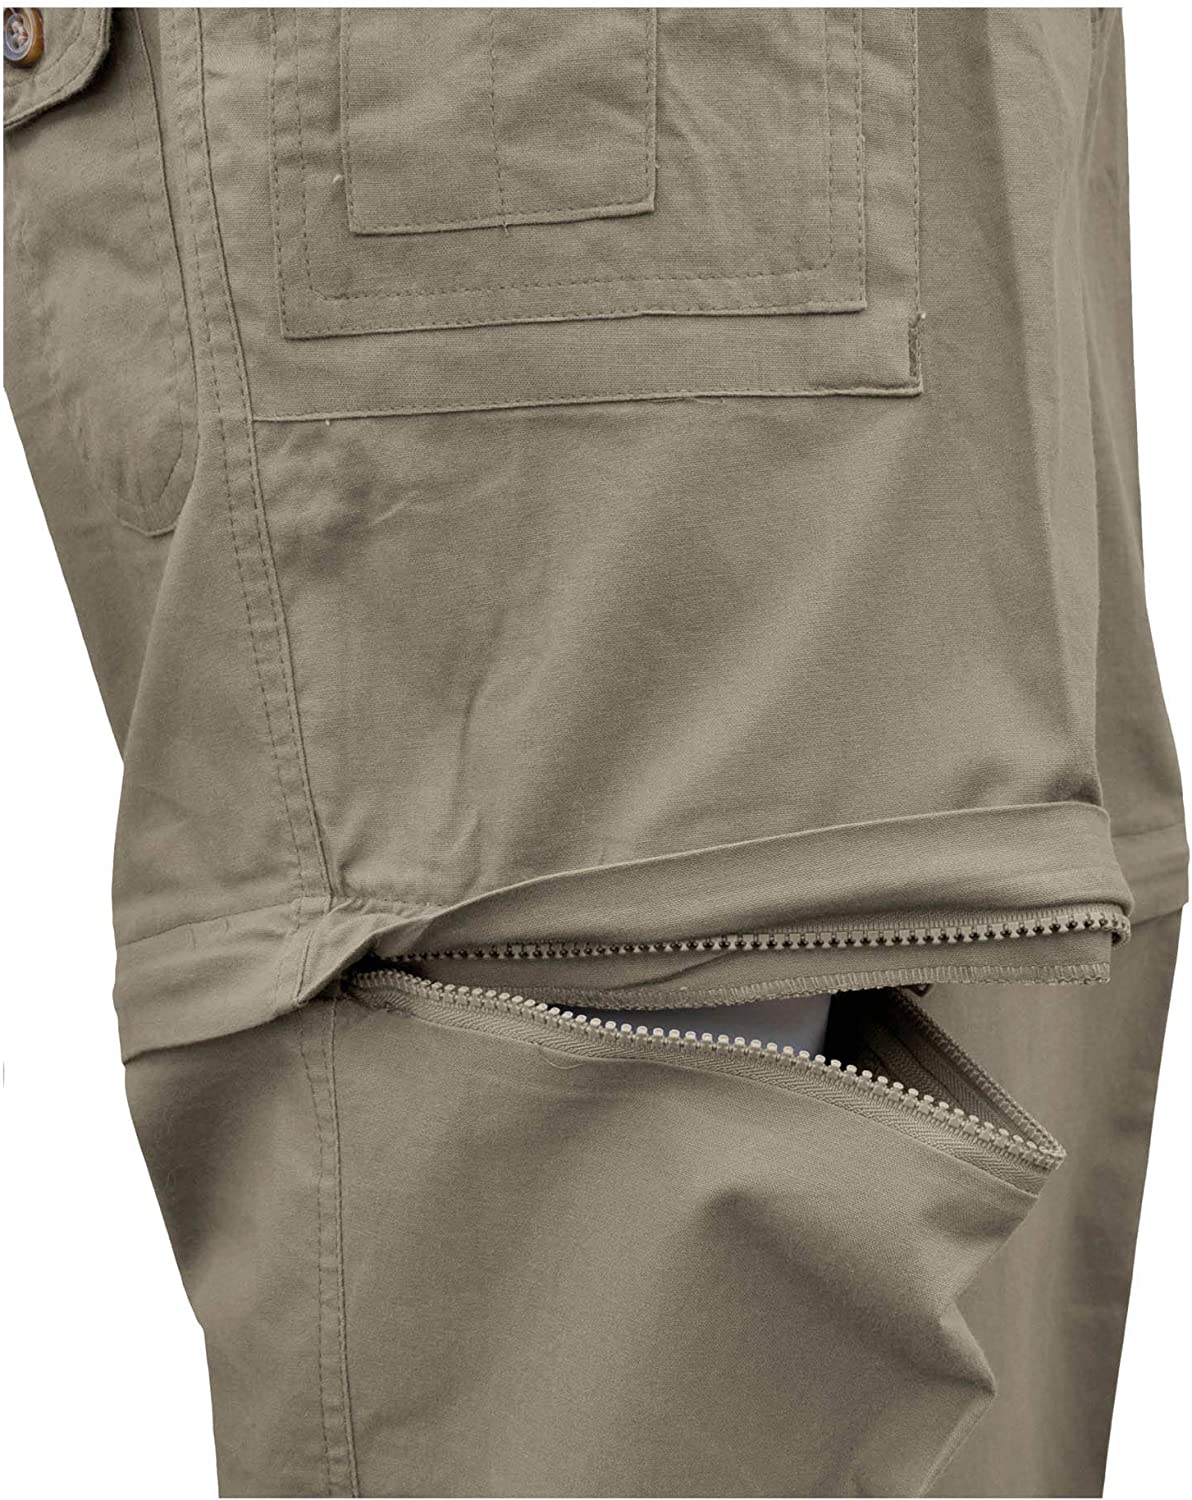 Zambezi Convertible Zip off Safari Pants for Men | TAG® Safari